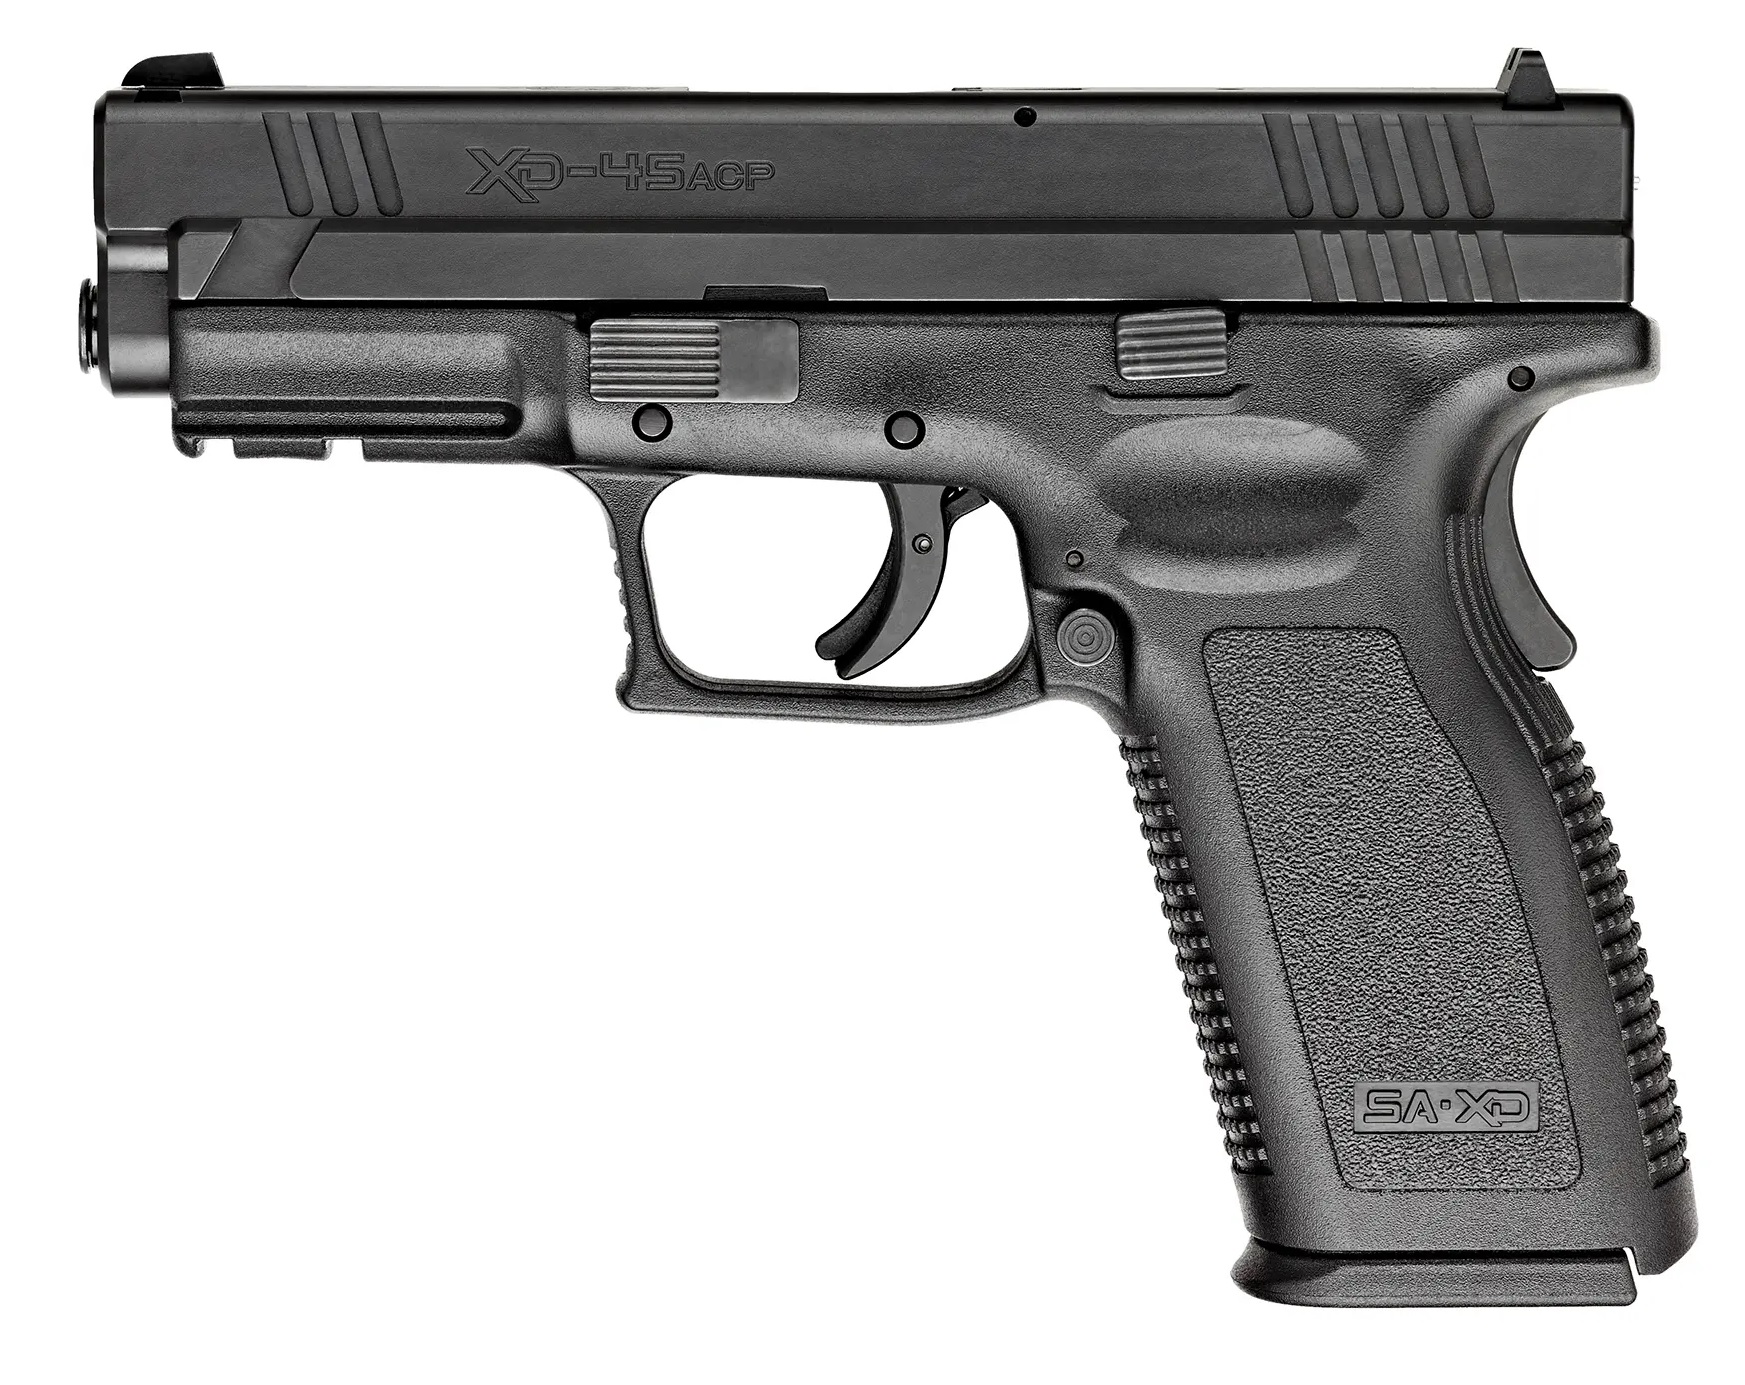 HS 2000 (Springfield XD- 45). Springfield XDM-40. Springfield XDM 9mm. Springfield XD 9 Compact Pistol.